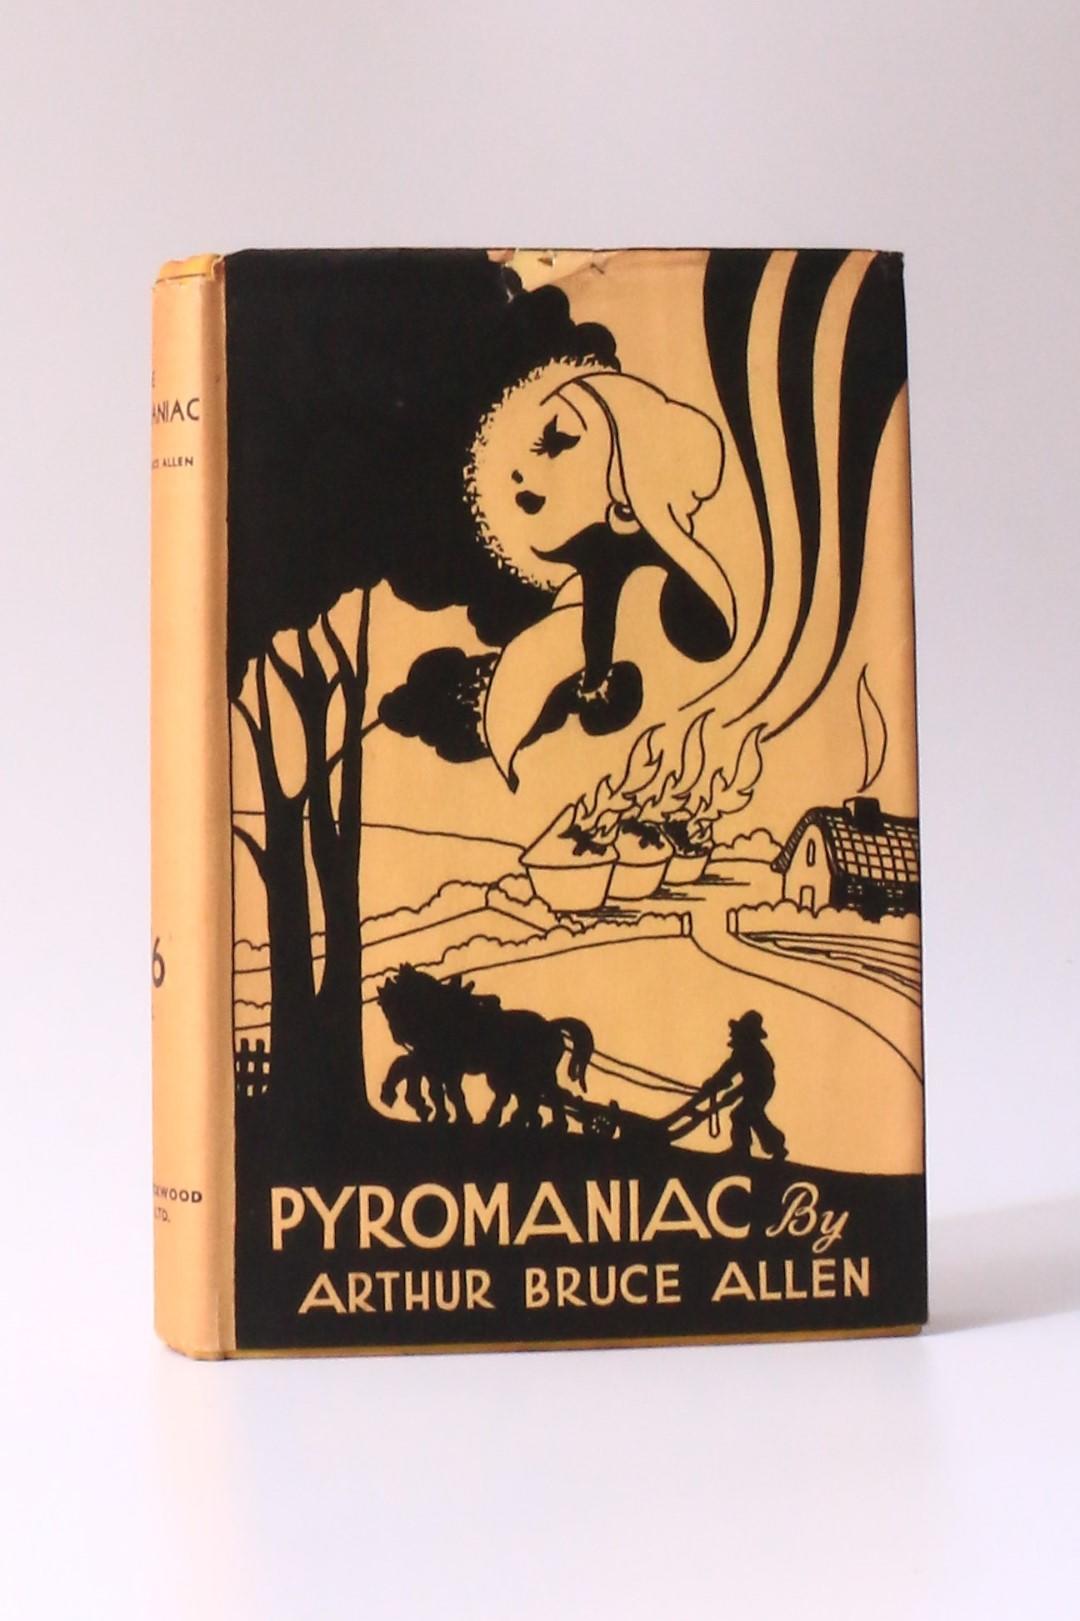 Arthur Bruce Allen - Pyromaniac - James Blackwood, n.d. [1938], First Edition.